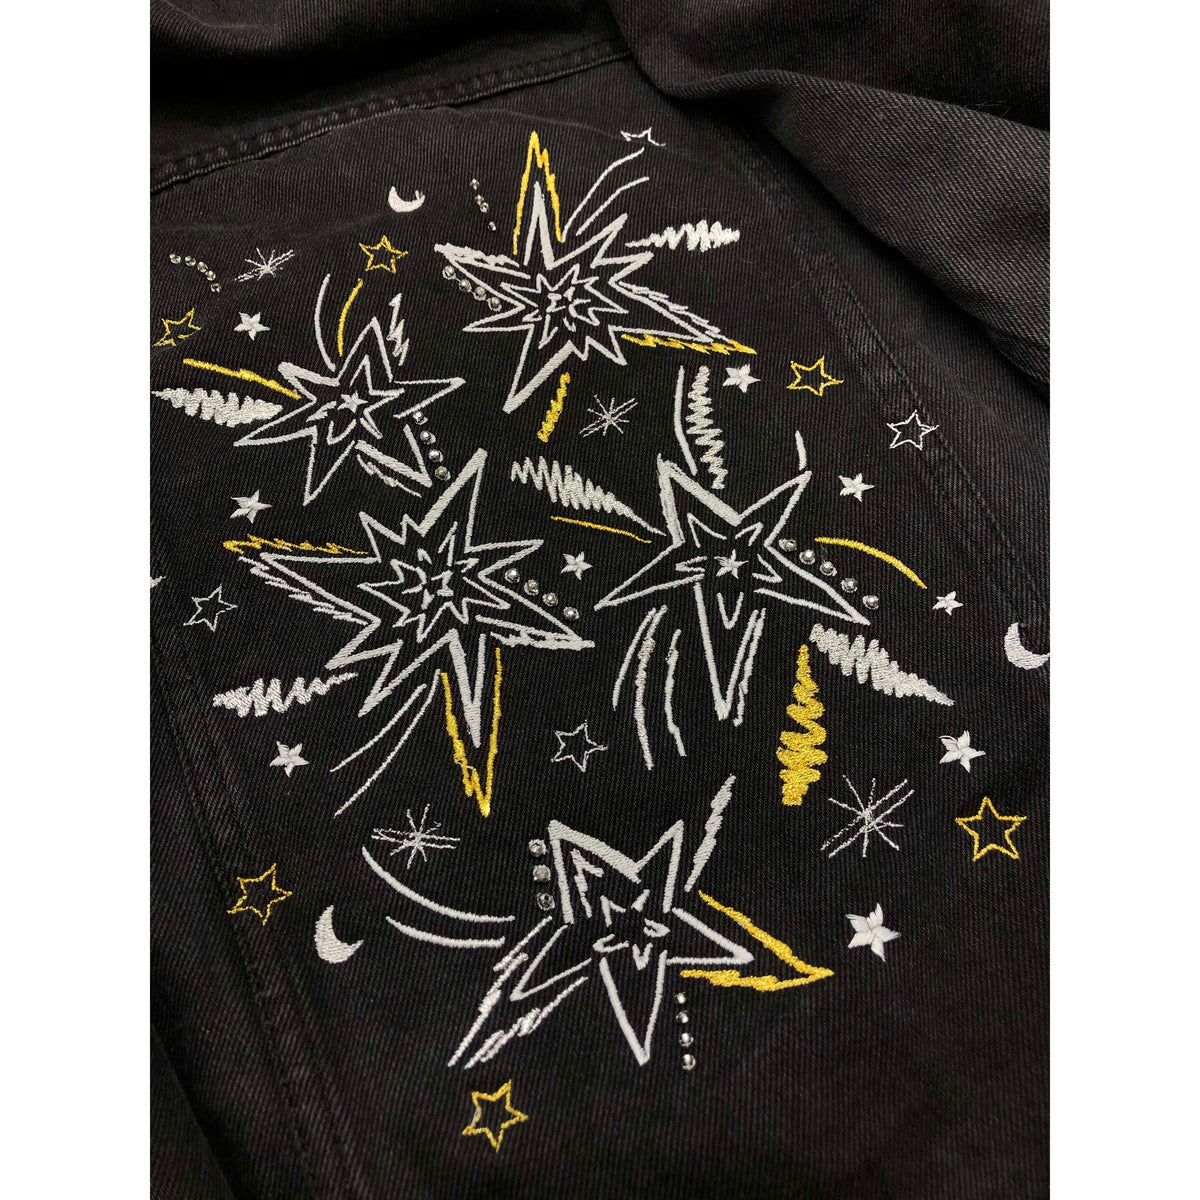 Starry Night Embroidered Denim Jacket